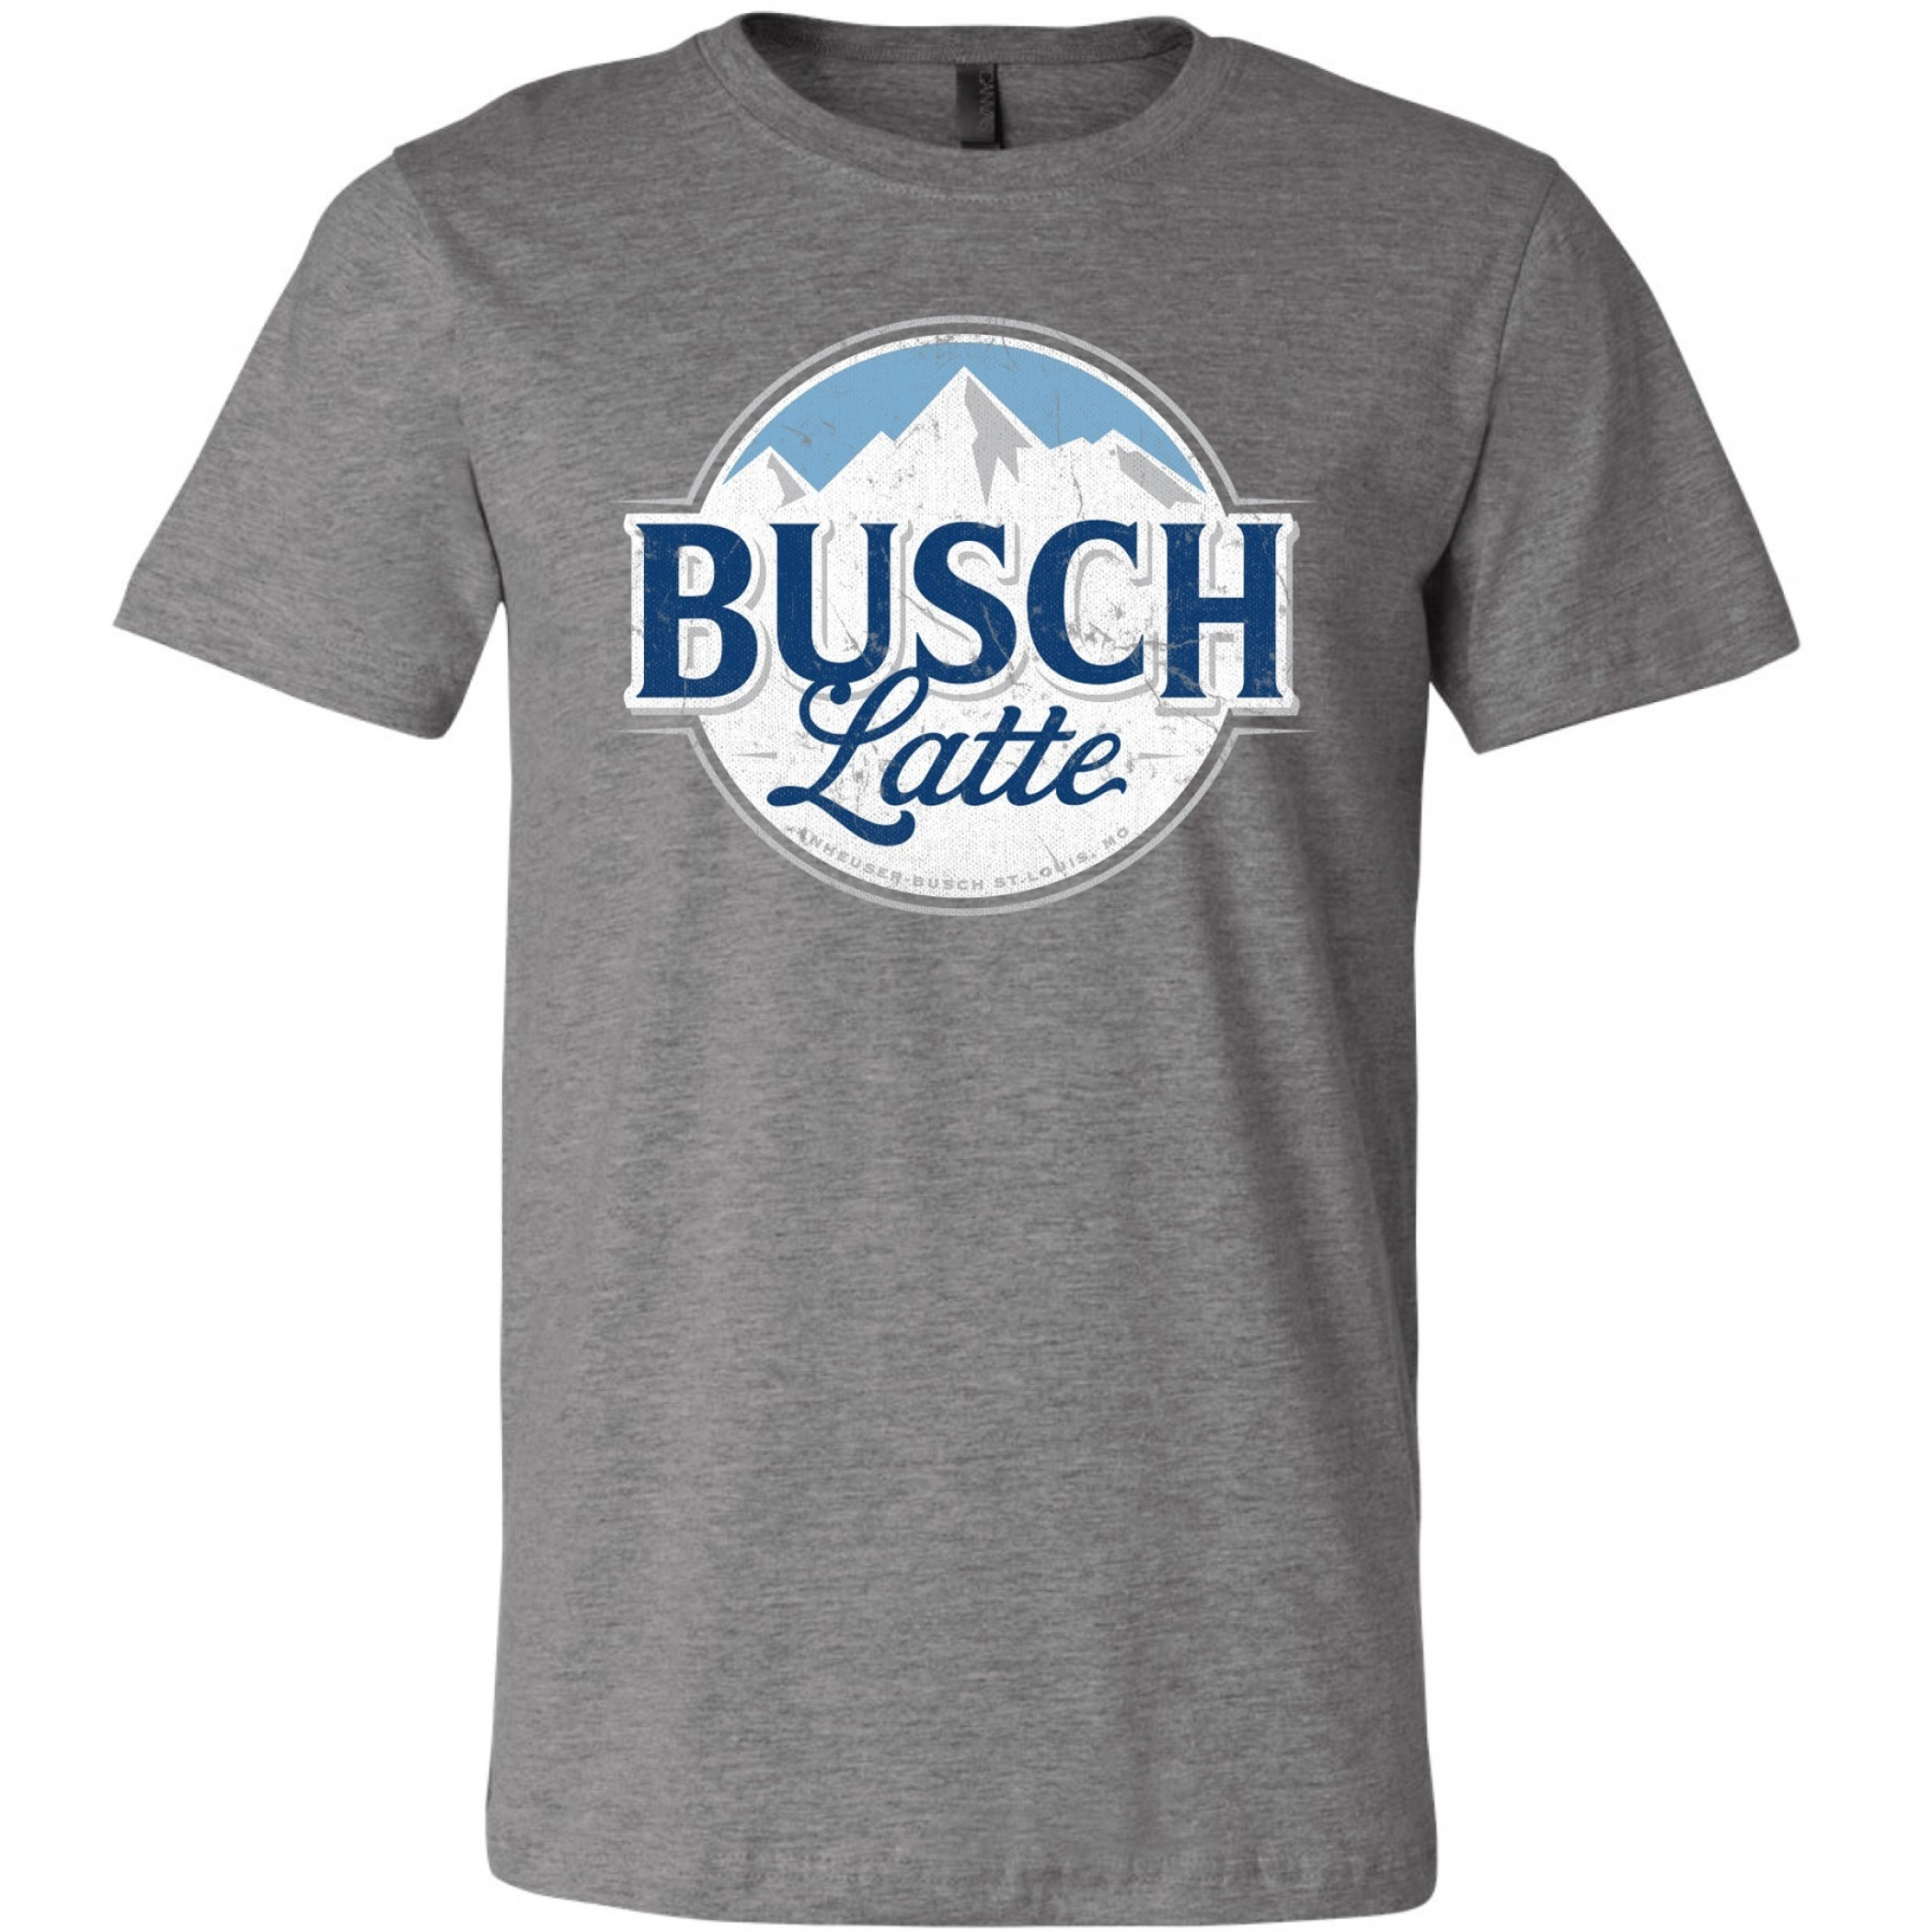 Busch Latte Logo Charcoal Grey Colorway T-Shirt